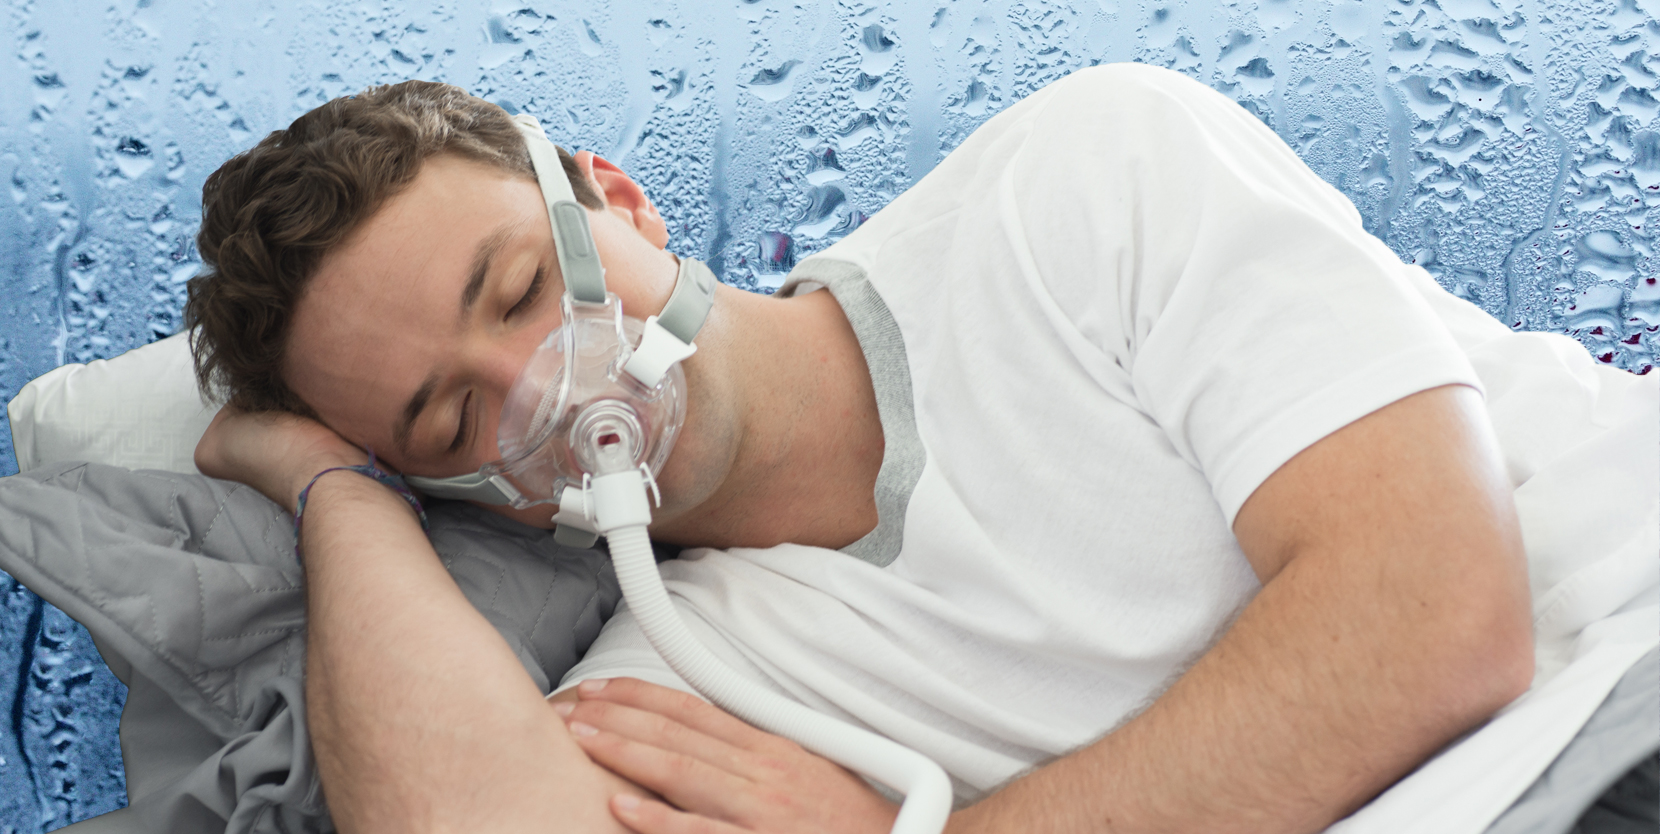 CPAP Masks